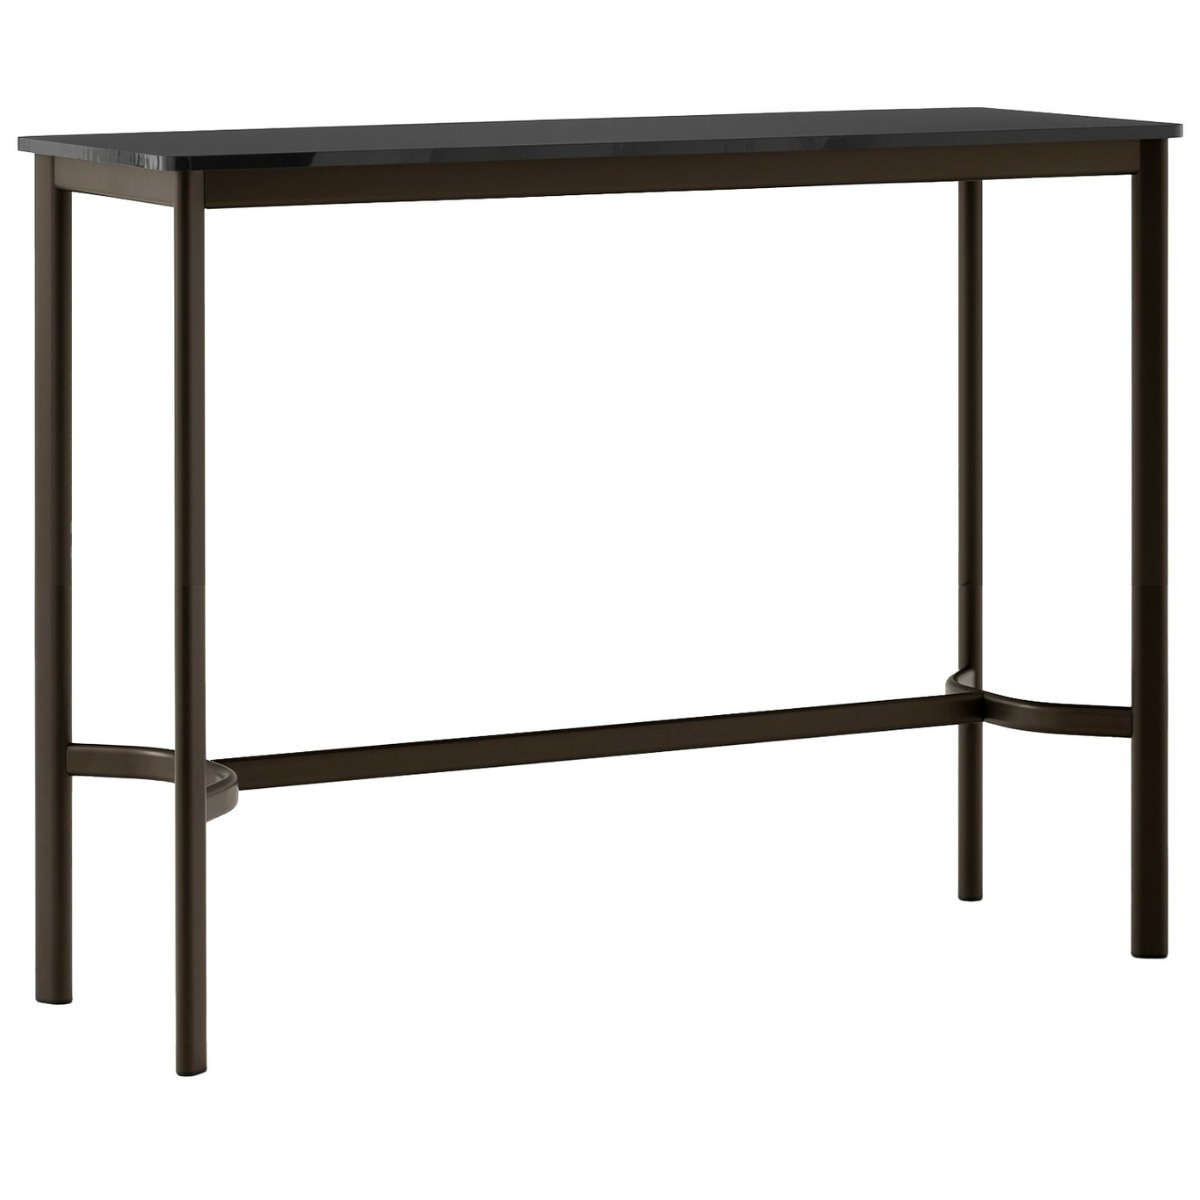 https://www.fundesign.nl/media/catalog/product/t/r/tradition-drip-bar-table-hw113-140x50x105-black-nano-laminate-black-legs-3.jpg